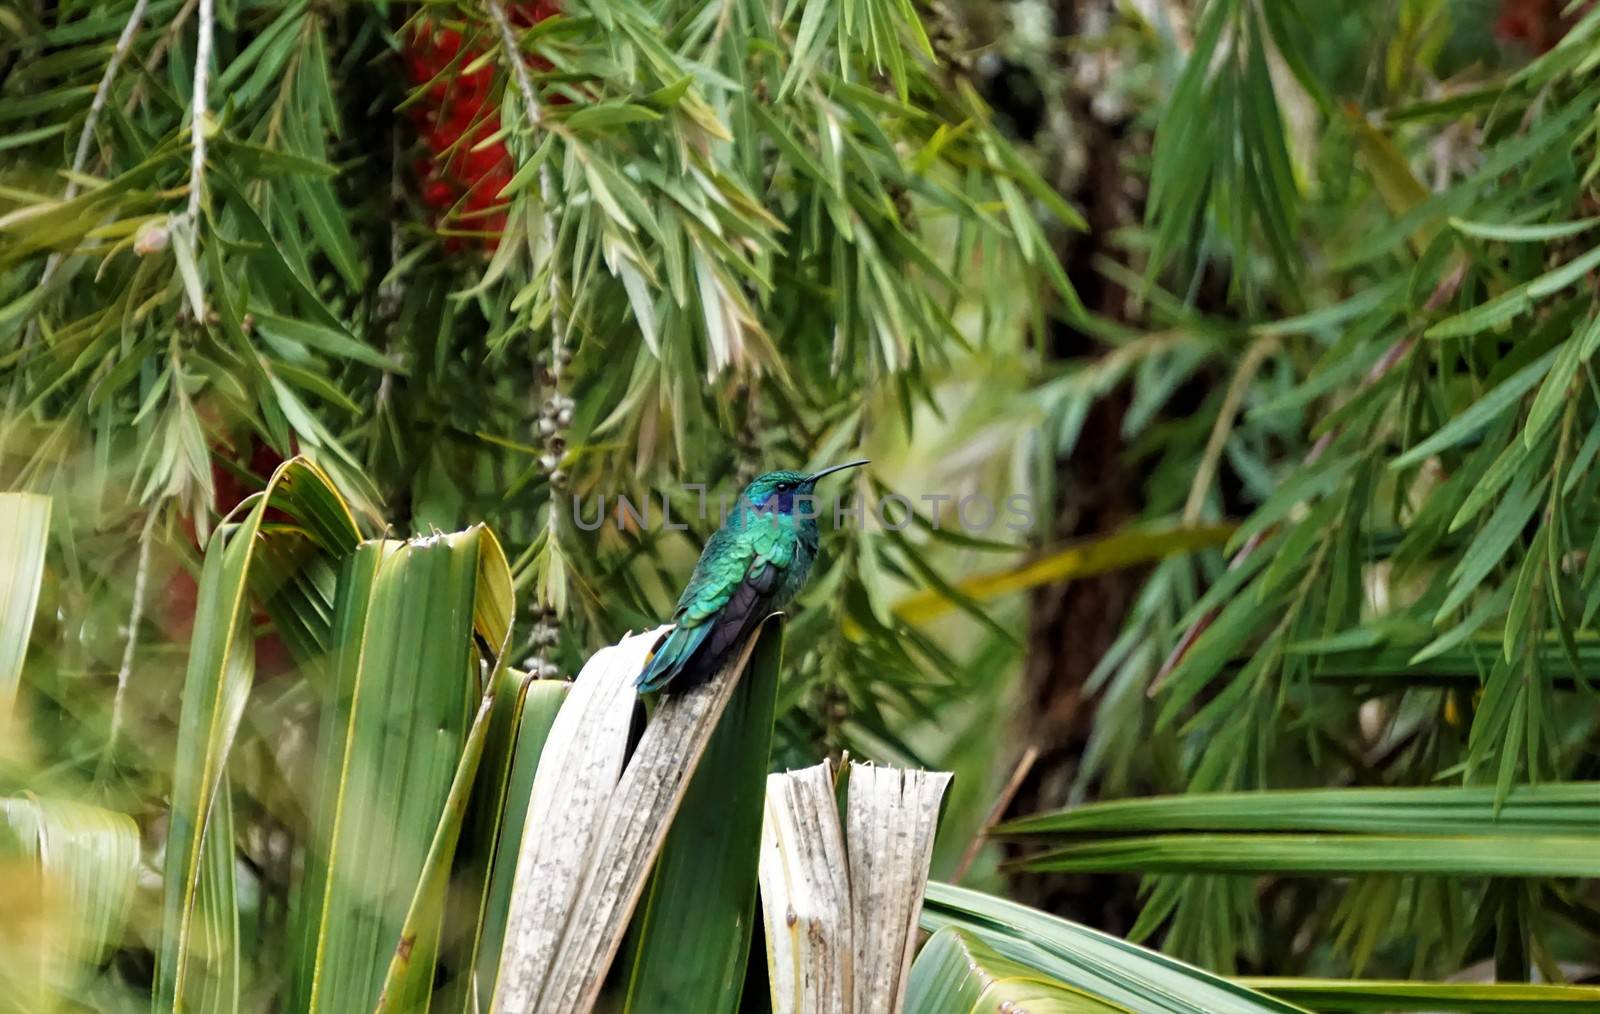 Violet ear hummingbird sitting on shrub in Costa Rica